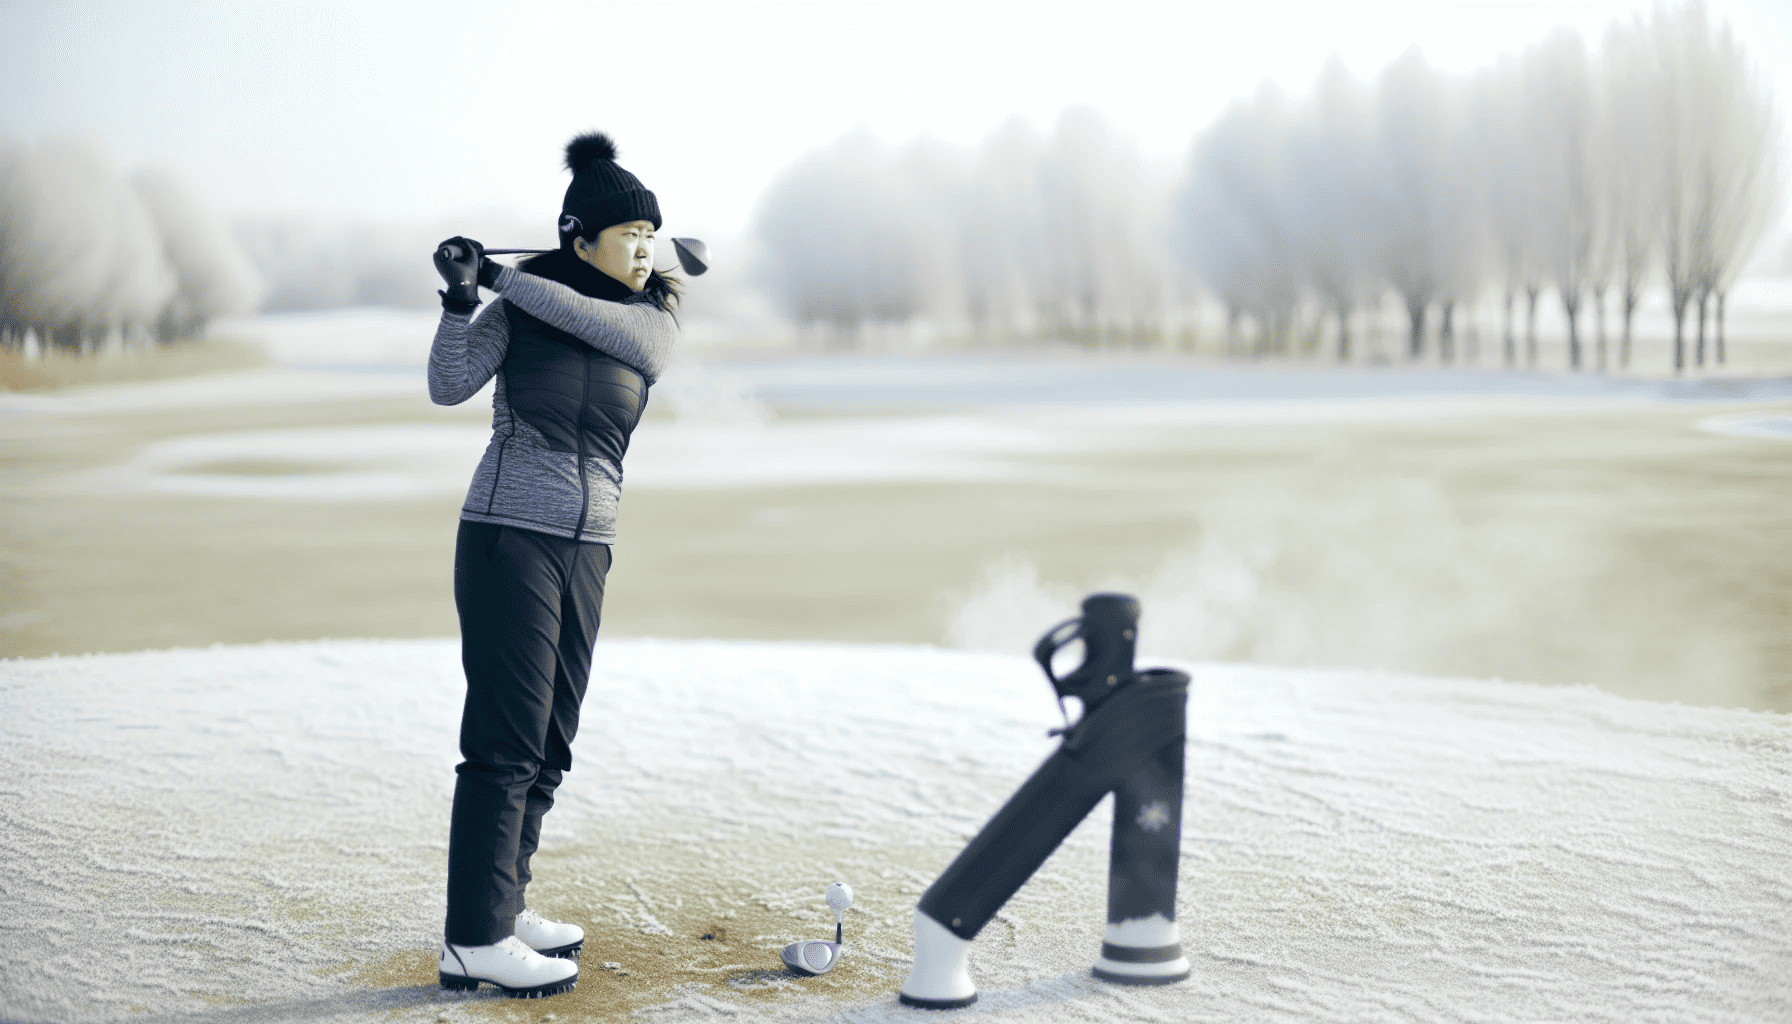 Golfer adjusting swing in cold weather